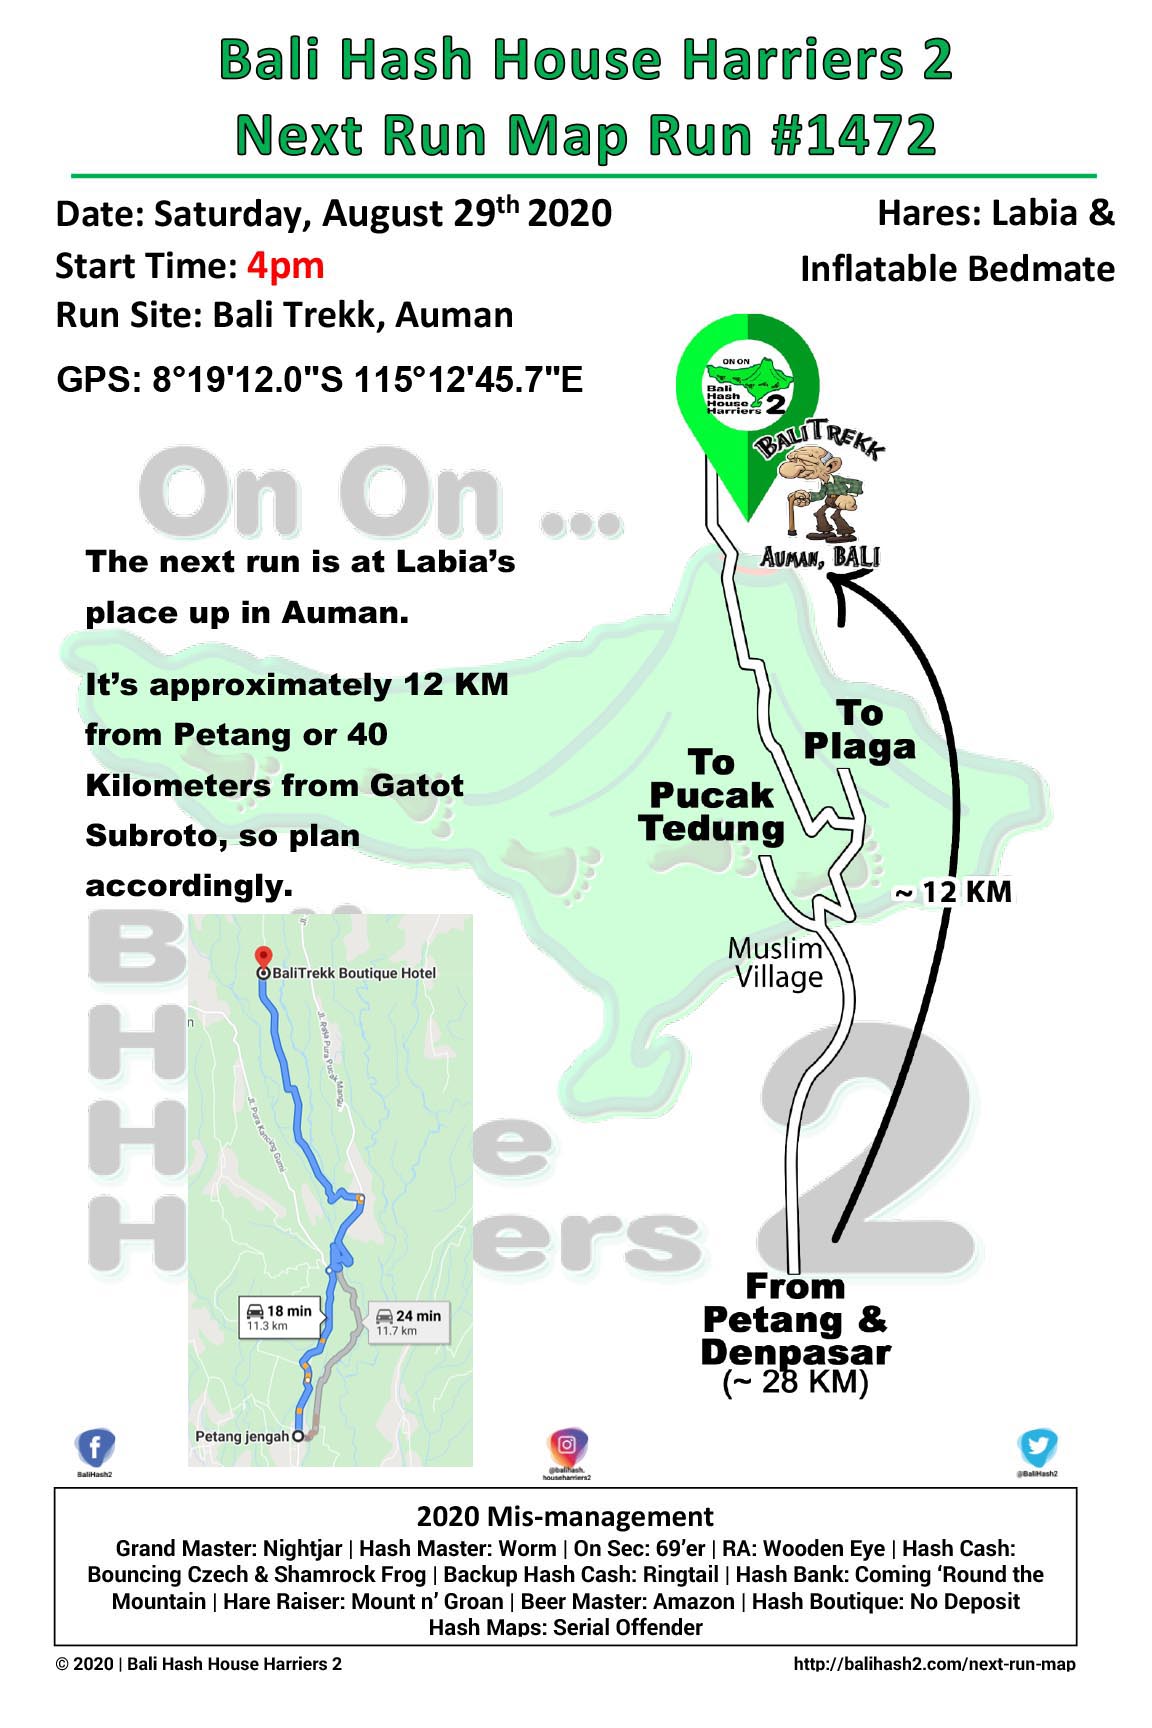 Bali Hash 2 Next Run Map #1472 Bali Trekk Auman